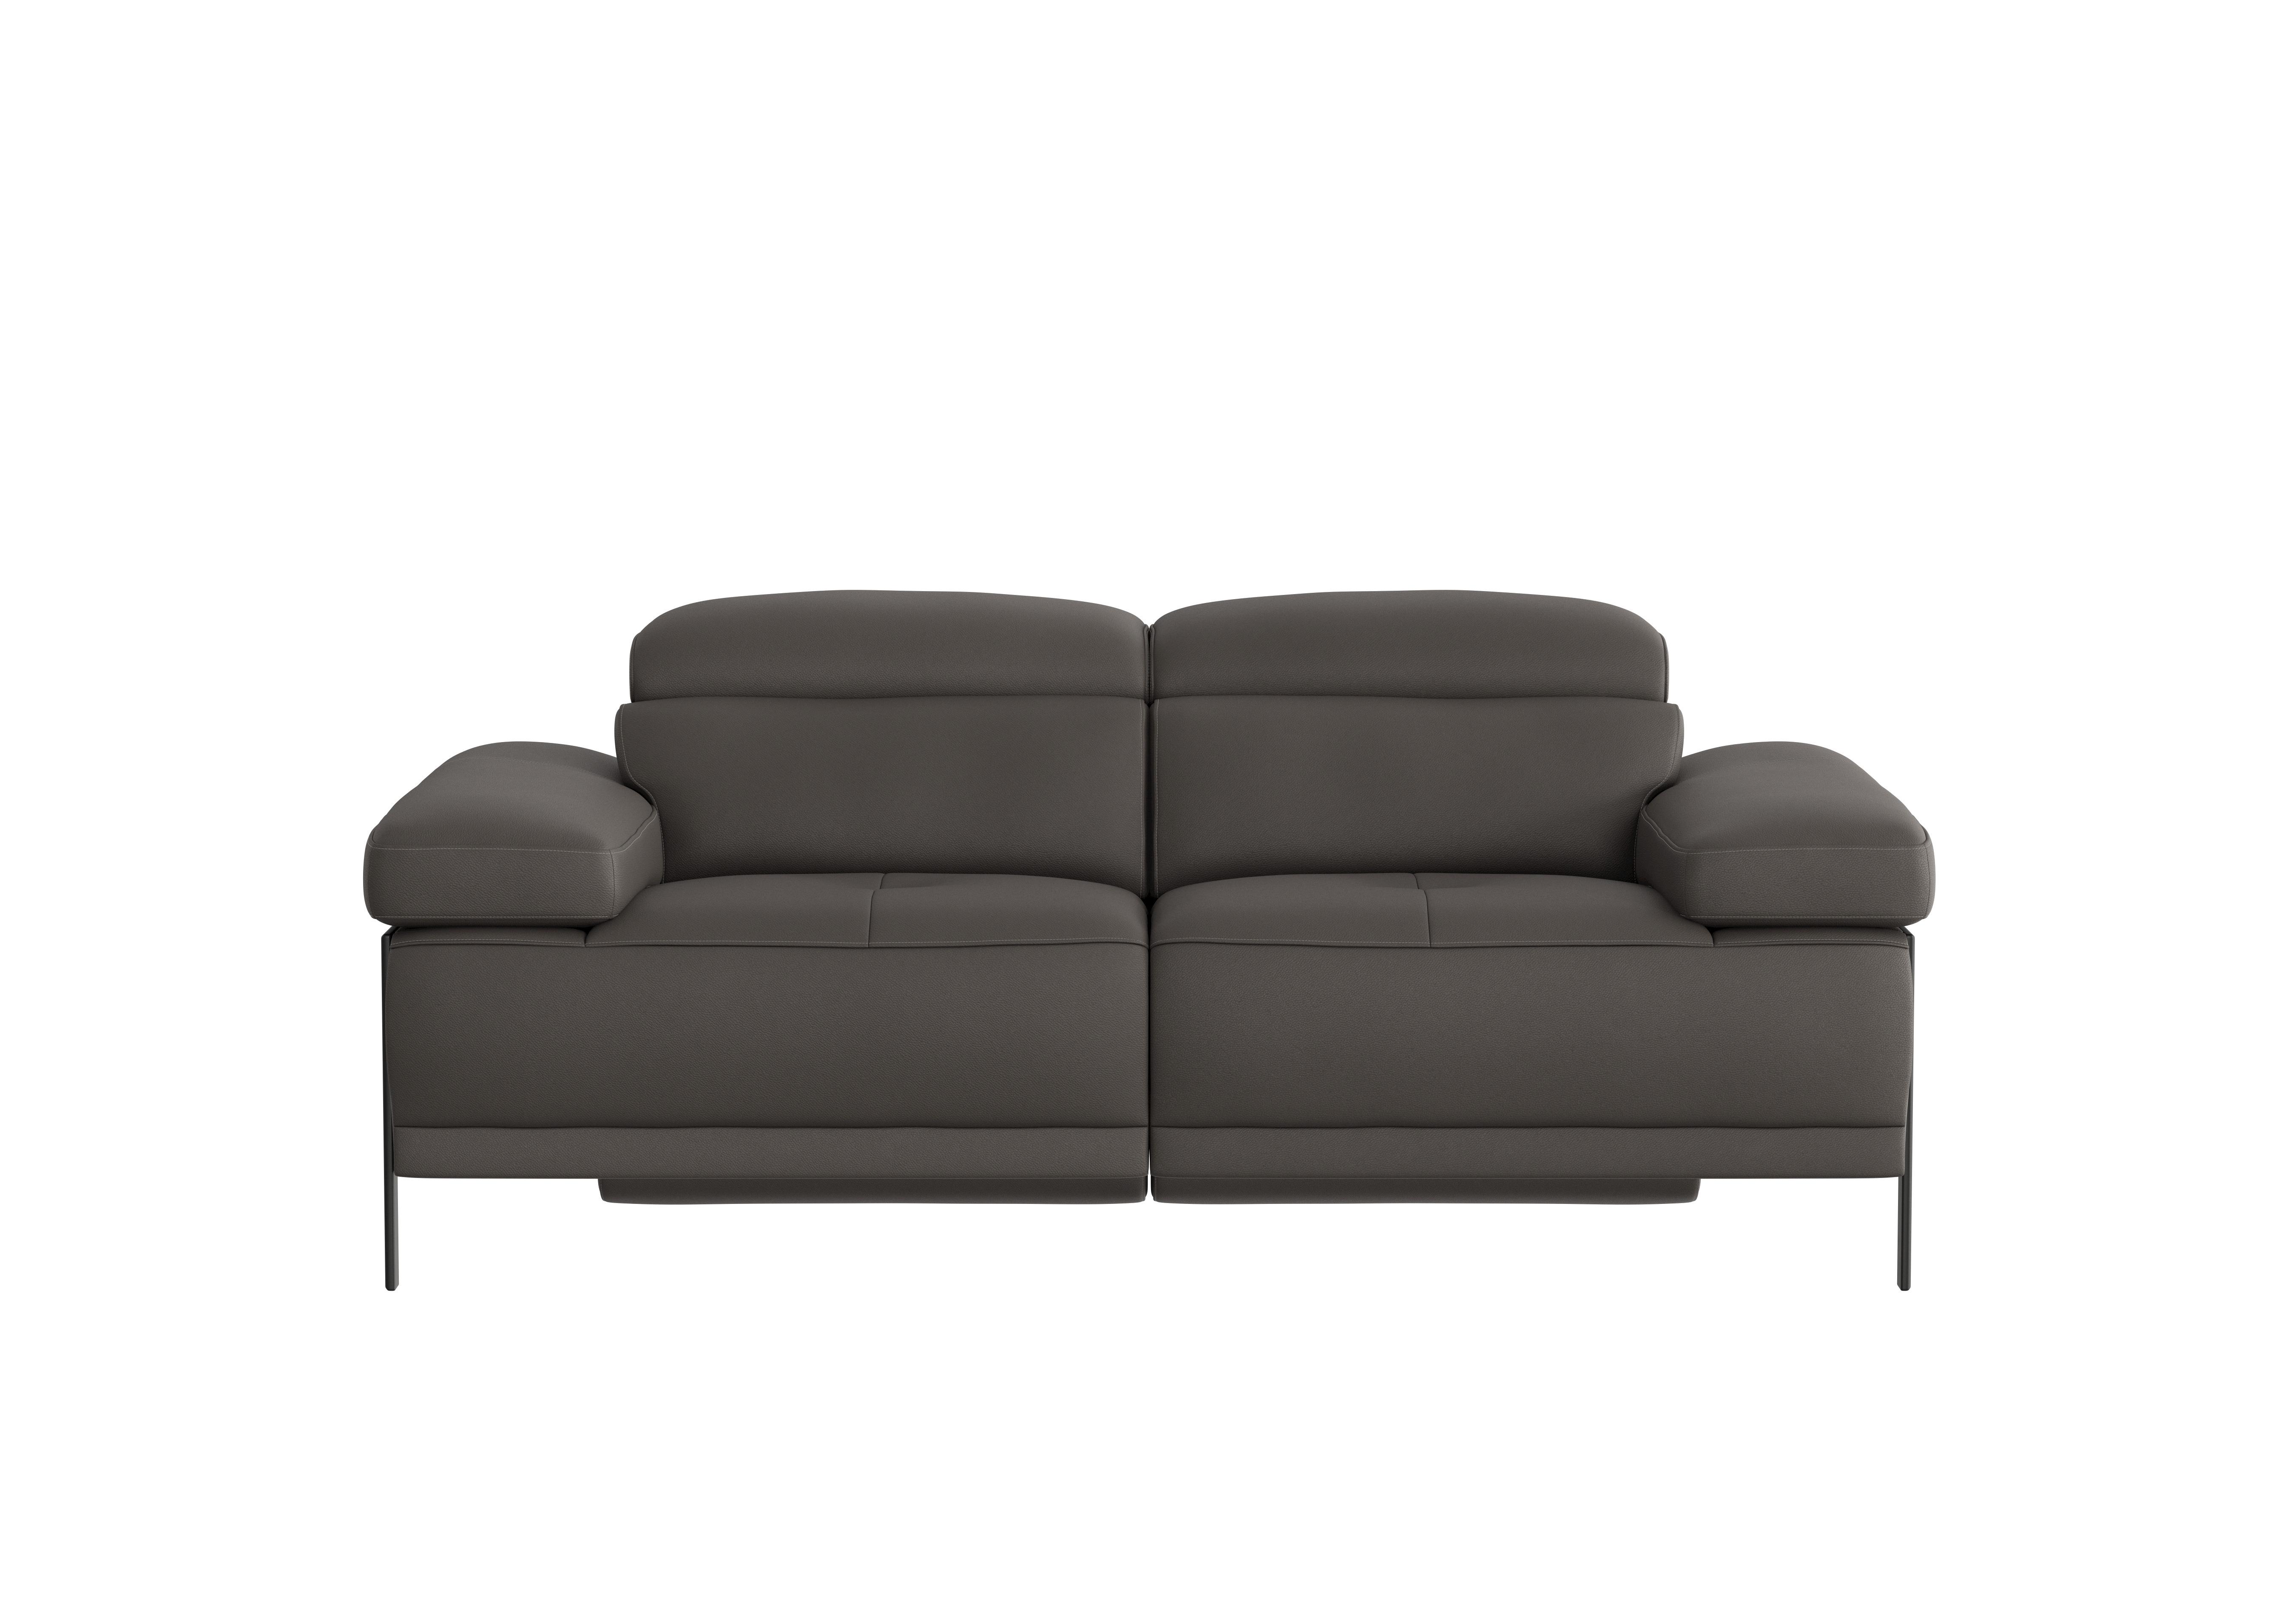 Theron 2 Seater Leather Sofa in Torello Grigio Scuro 327 Ti Ft on Furniture Village